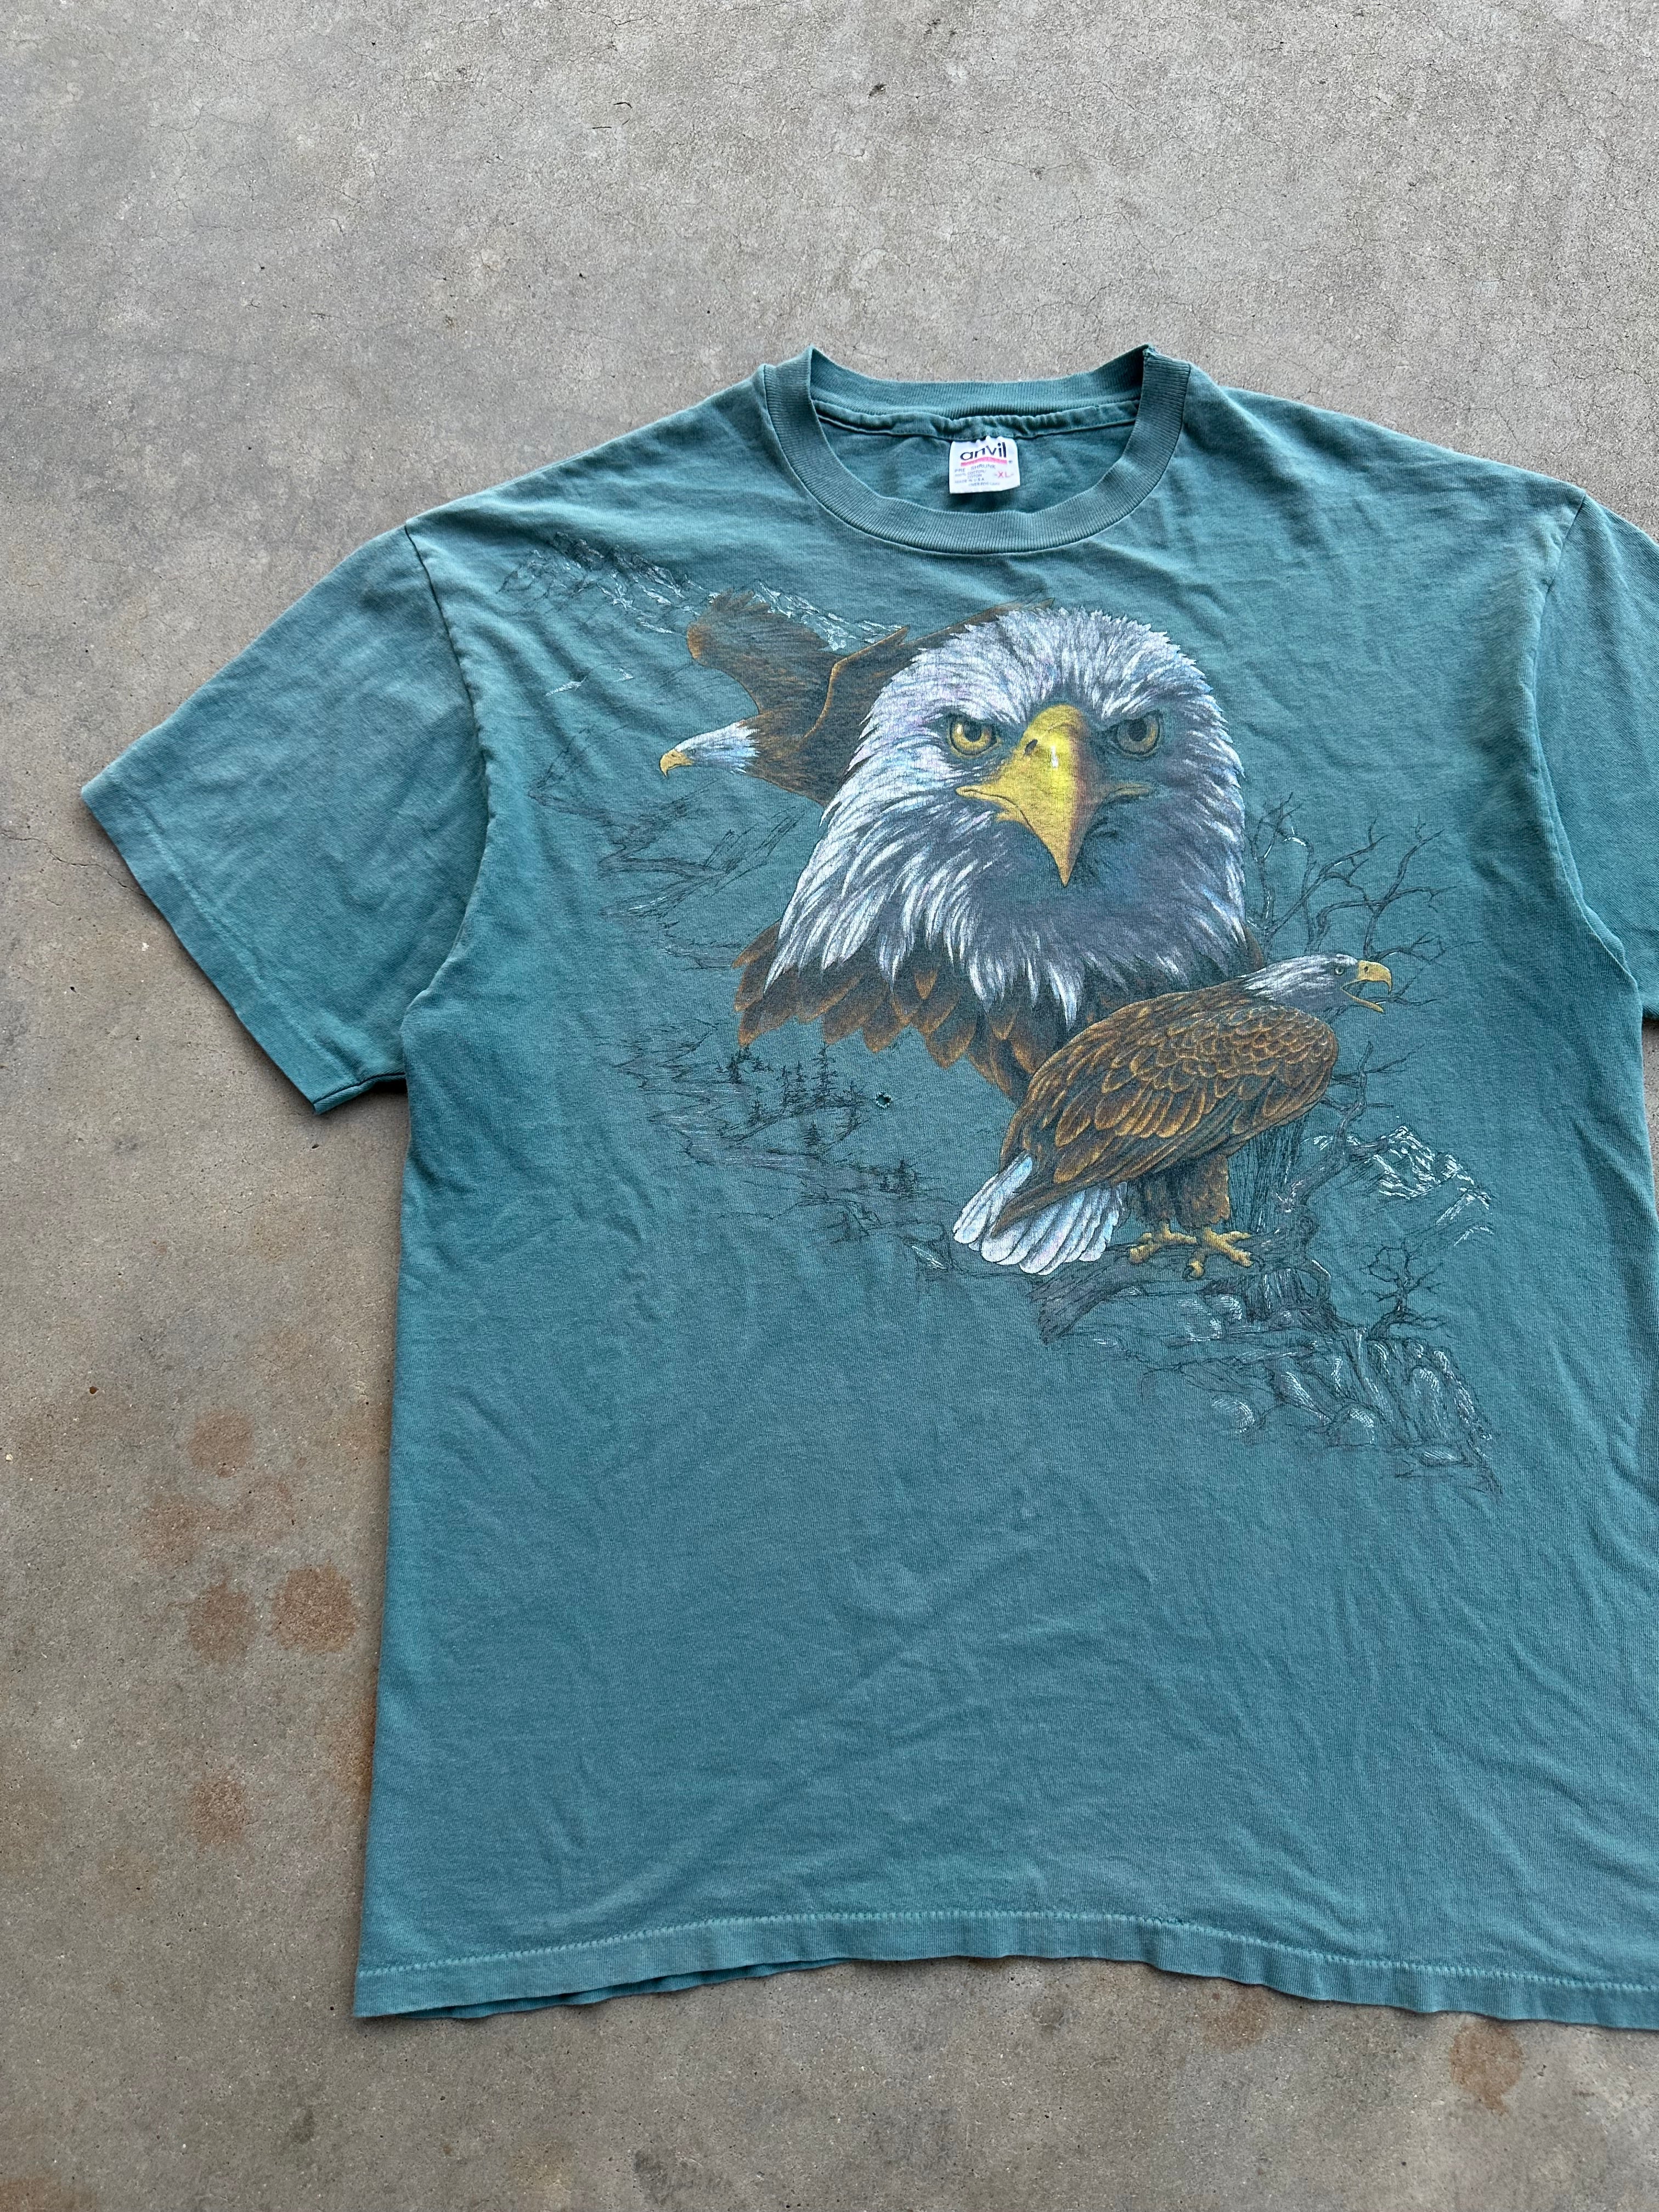 1990s Faded Eagle Nature T-Shirt (L/XL)